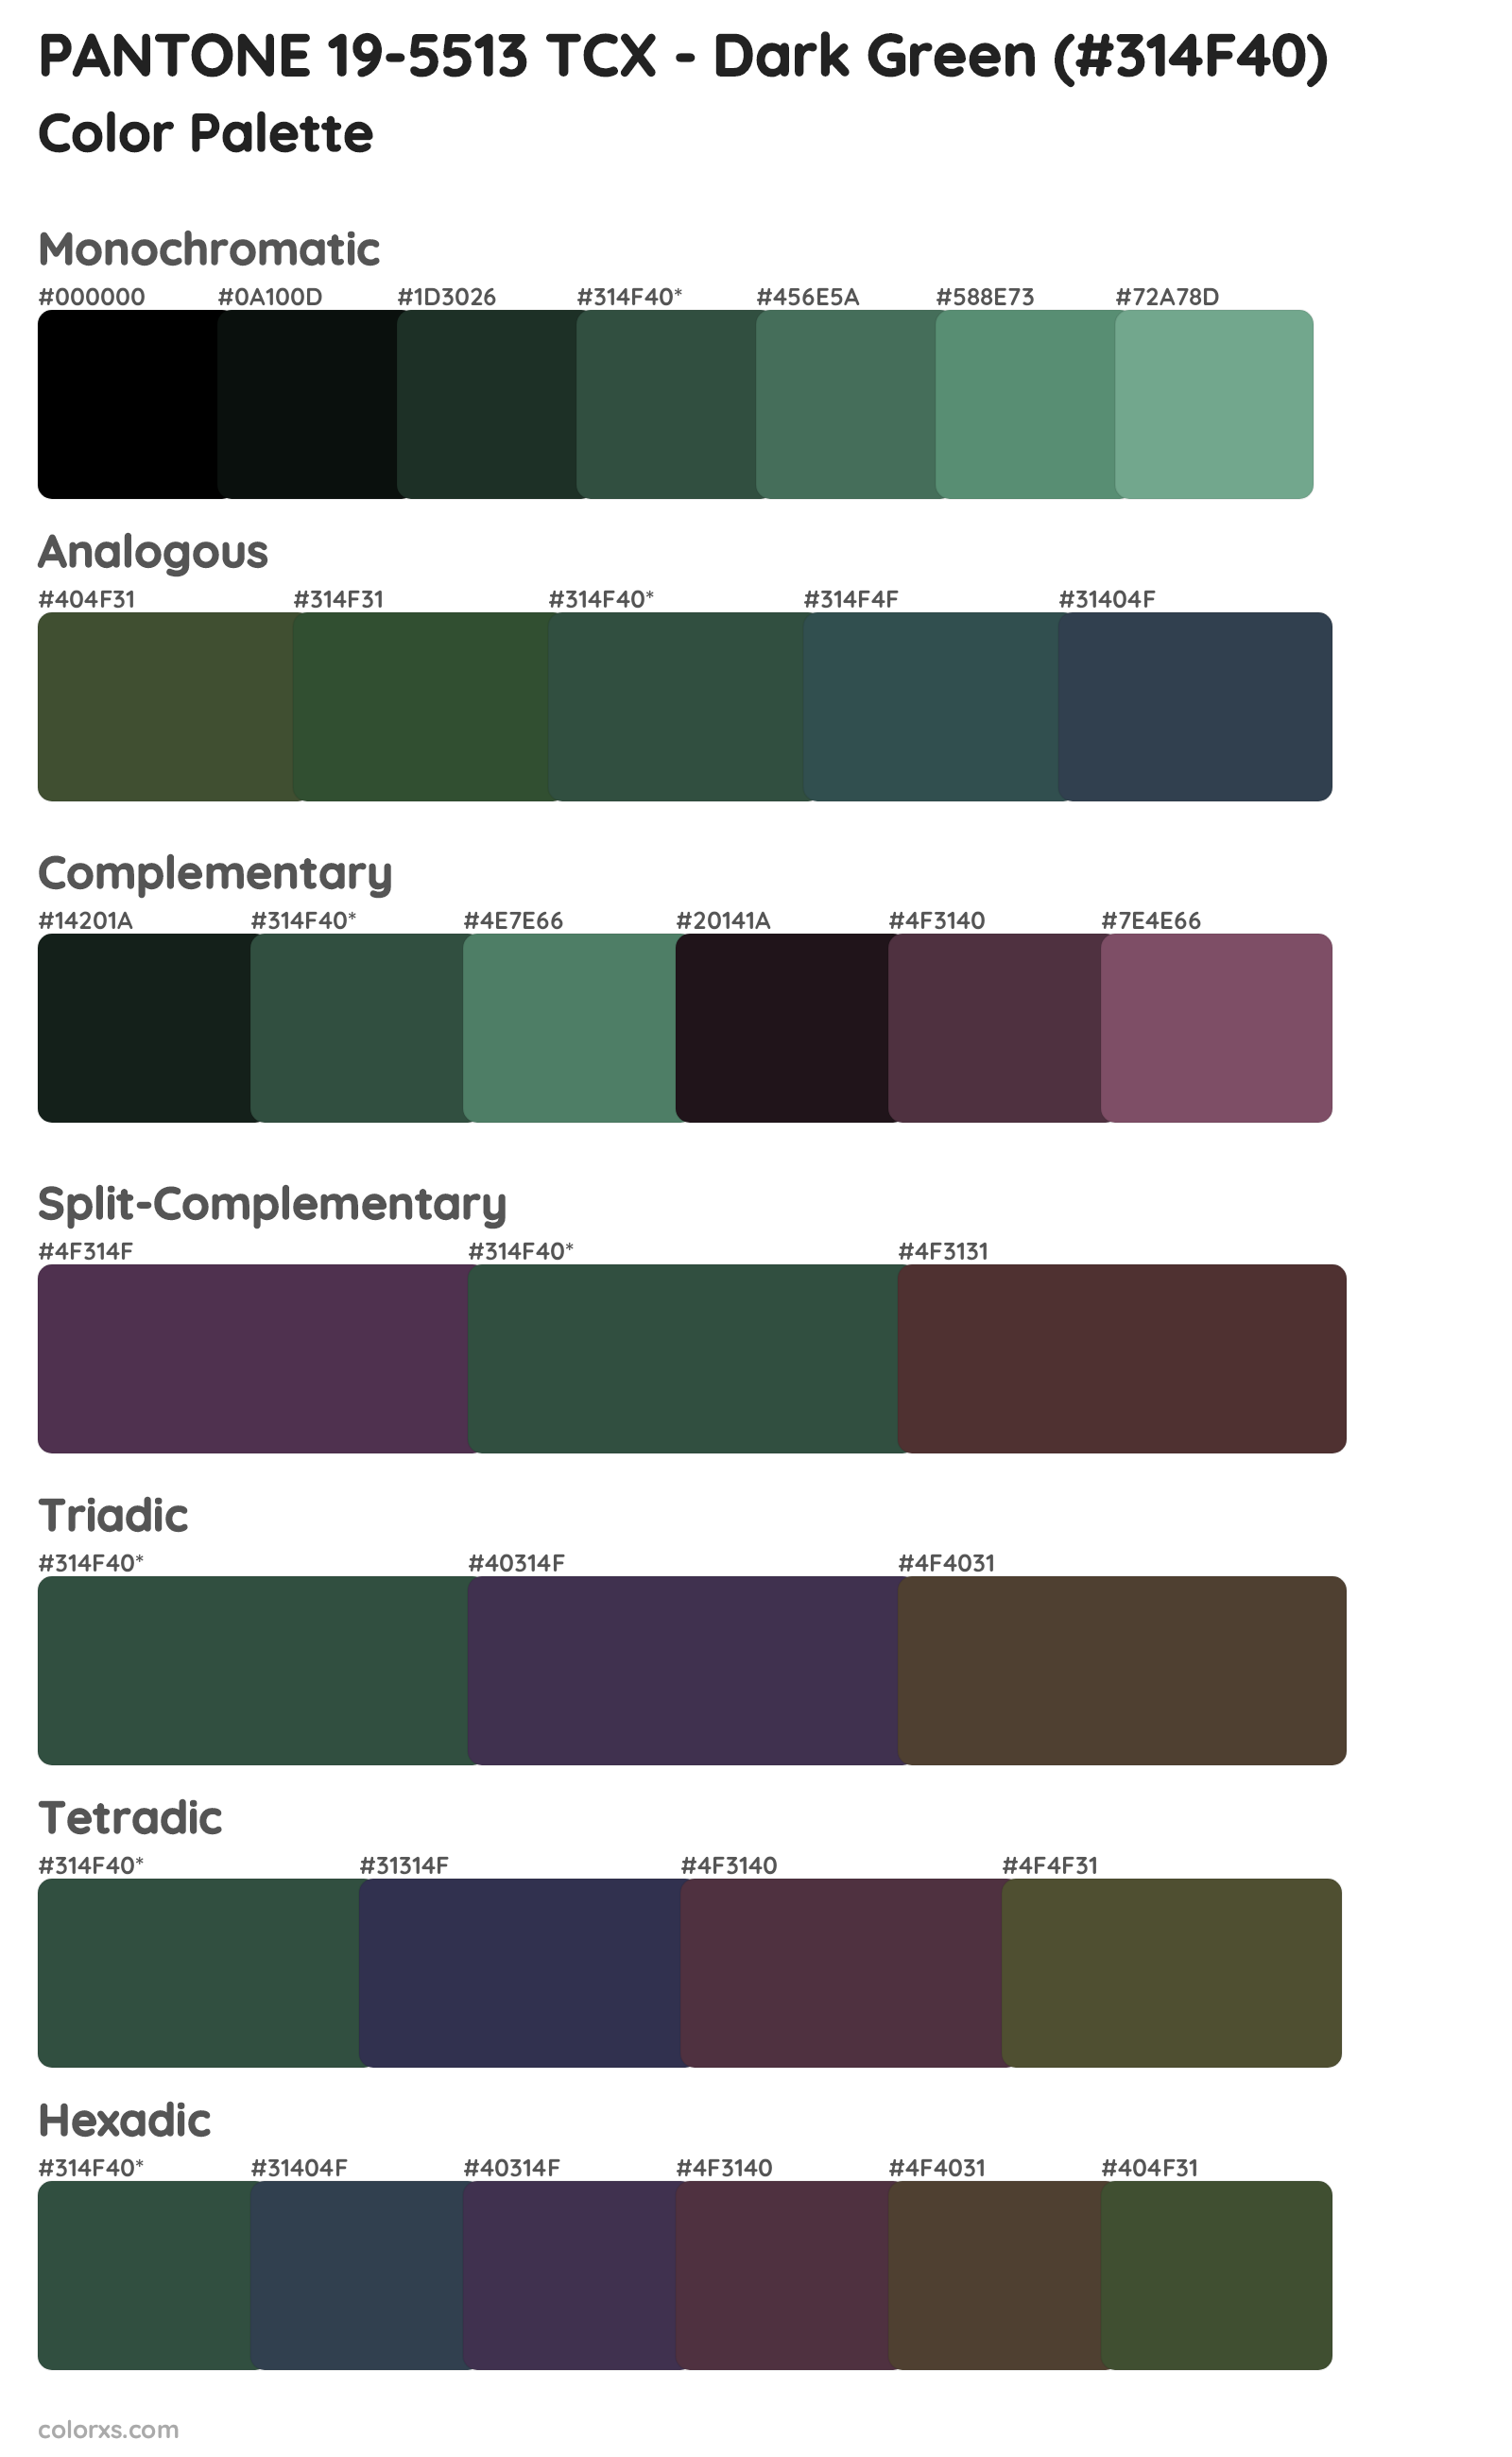 PANTONE 19-5513 TCX - Dark Green Color Scheme Palettes